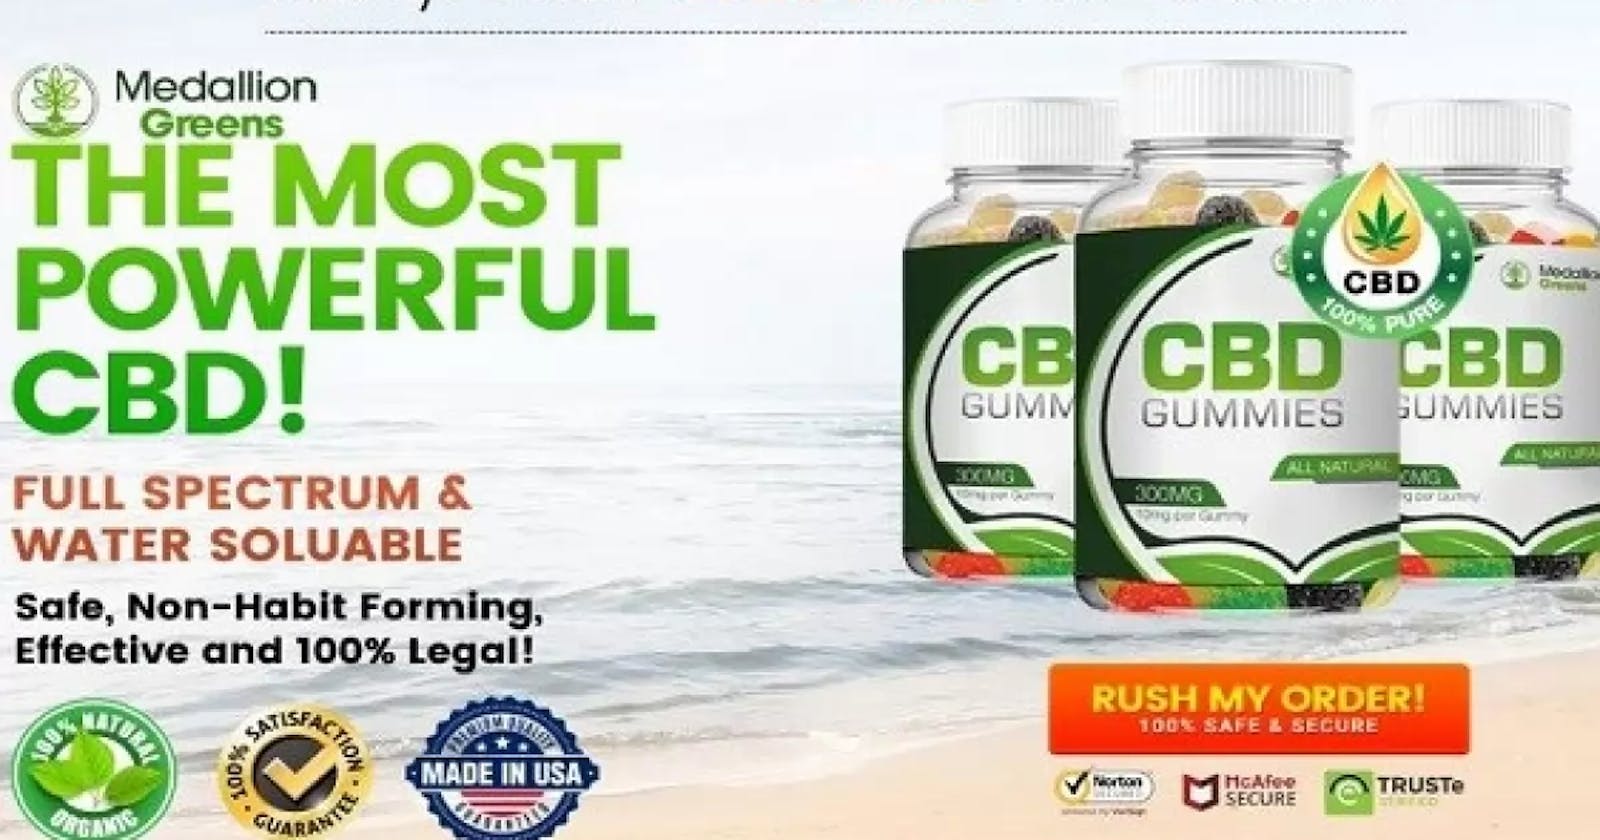 Medallion Greens CBD Gummies – Relieves Stress, Pain & Discomfort Easily! Price